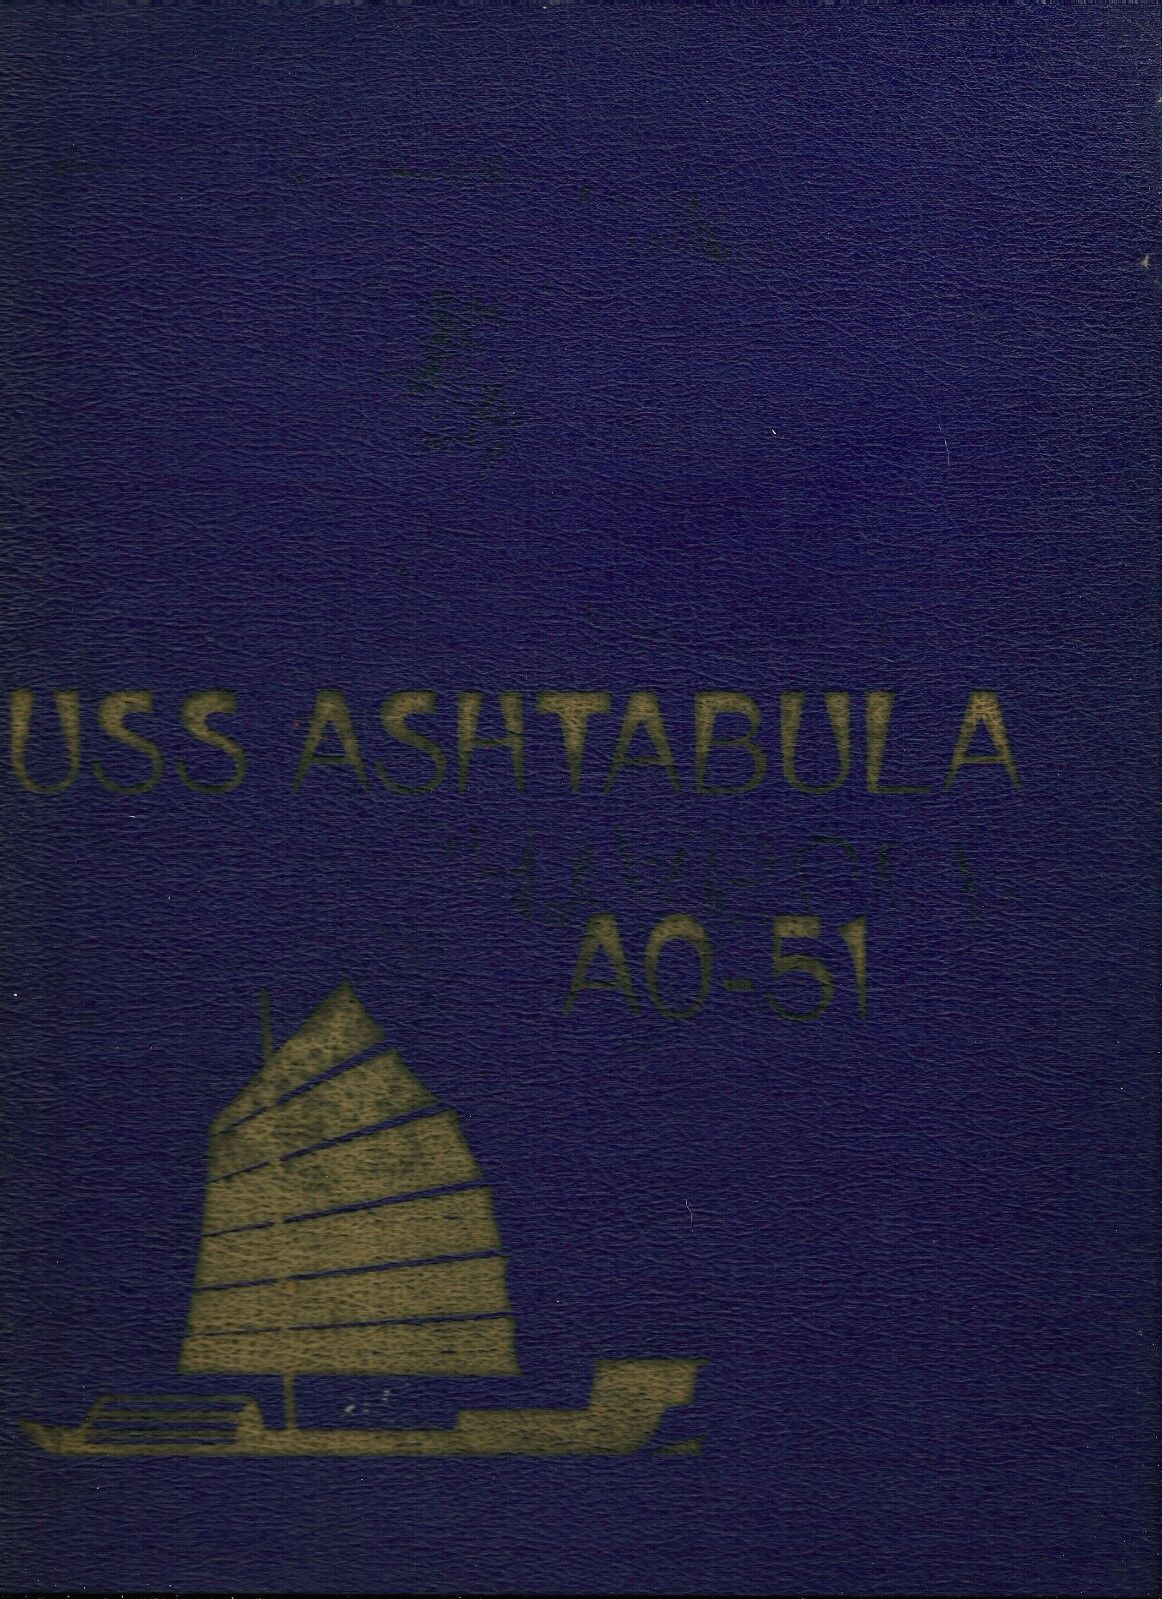 ☆ USS ASHTABULA AO-51 WESTPAC DEPLOYMENT CRUISE BOOK YEAR LOG 1970-71 - NAVY ☆